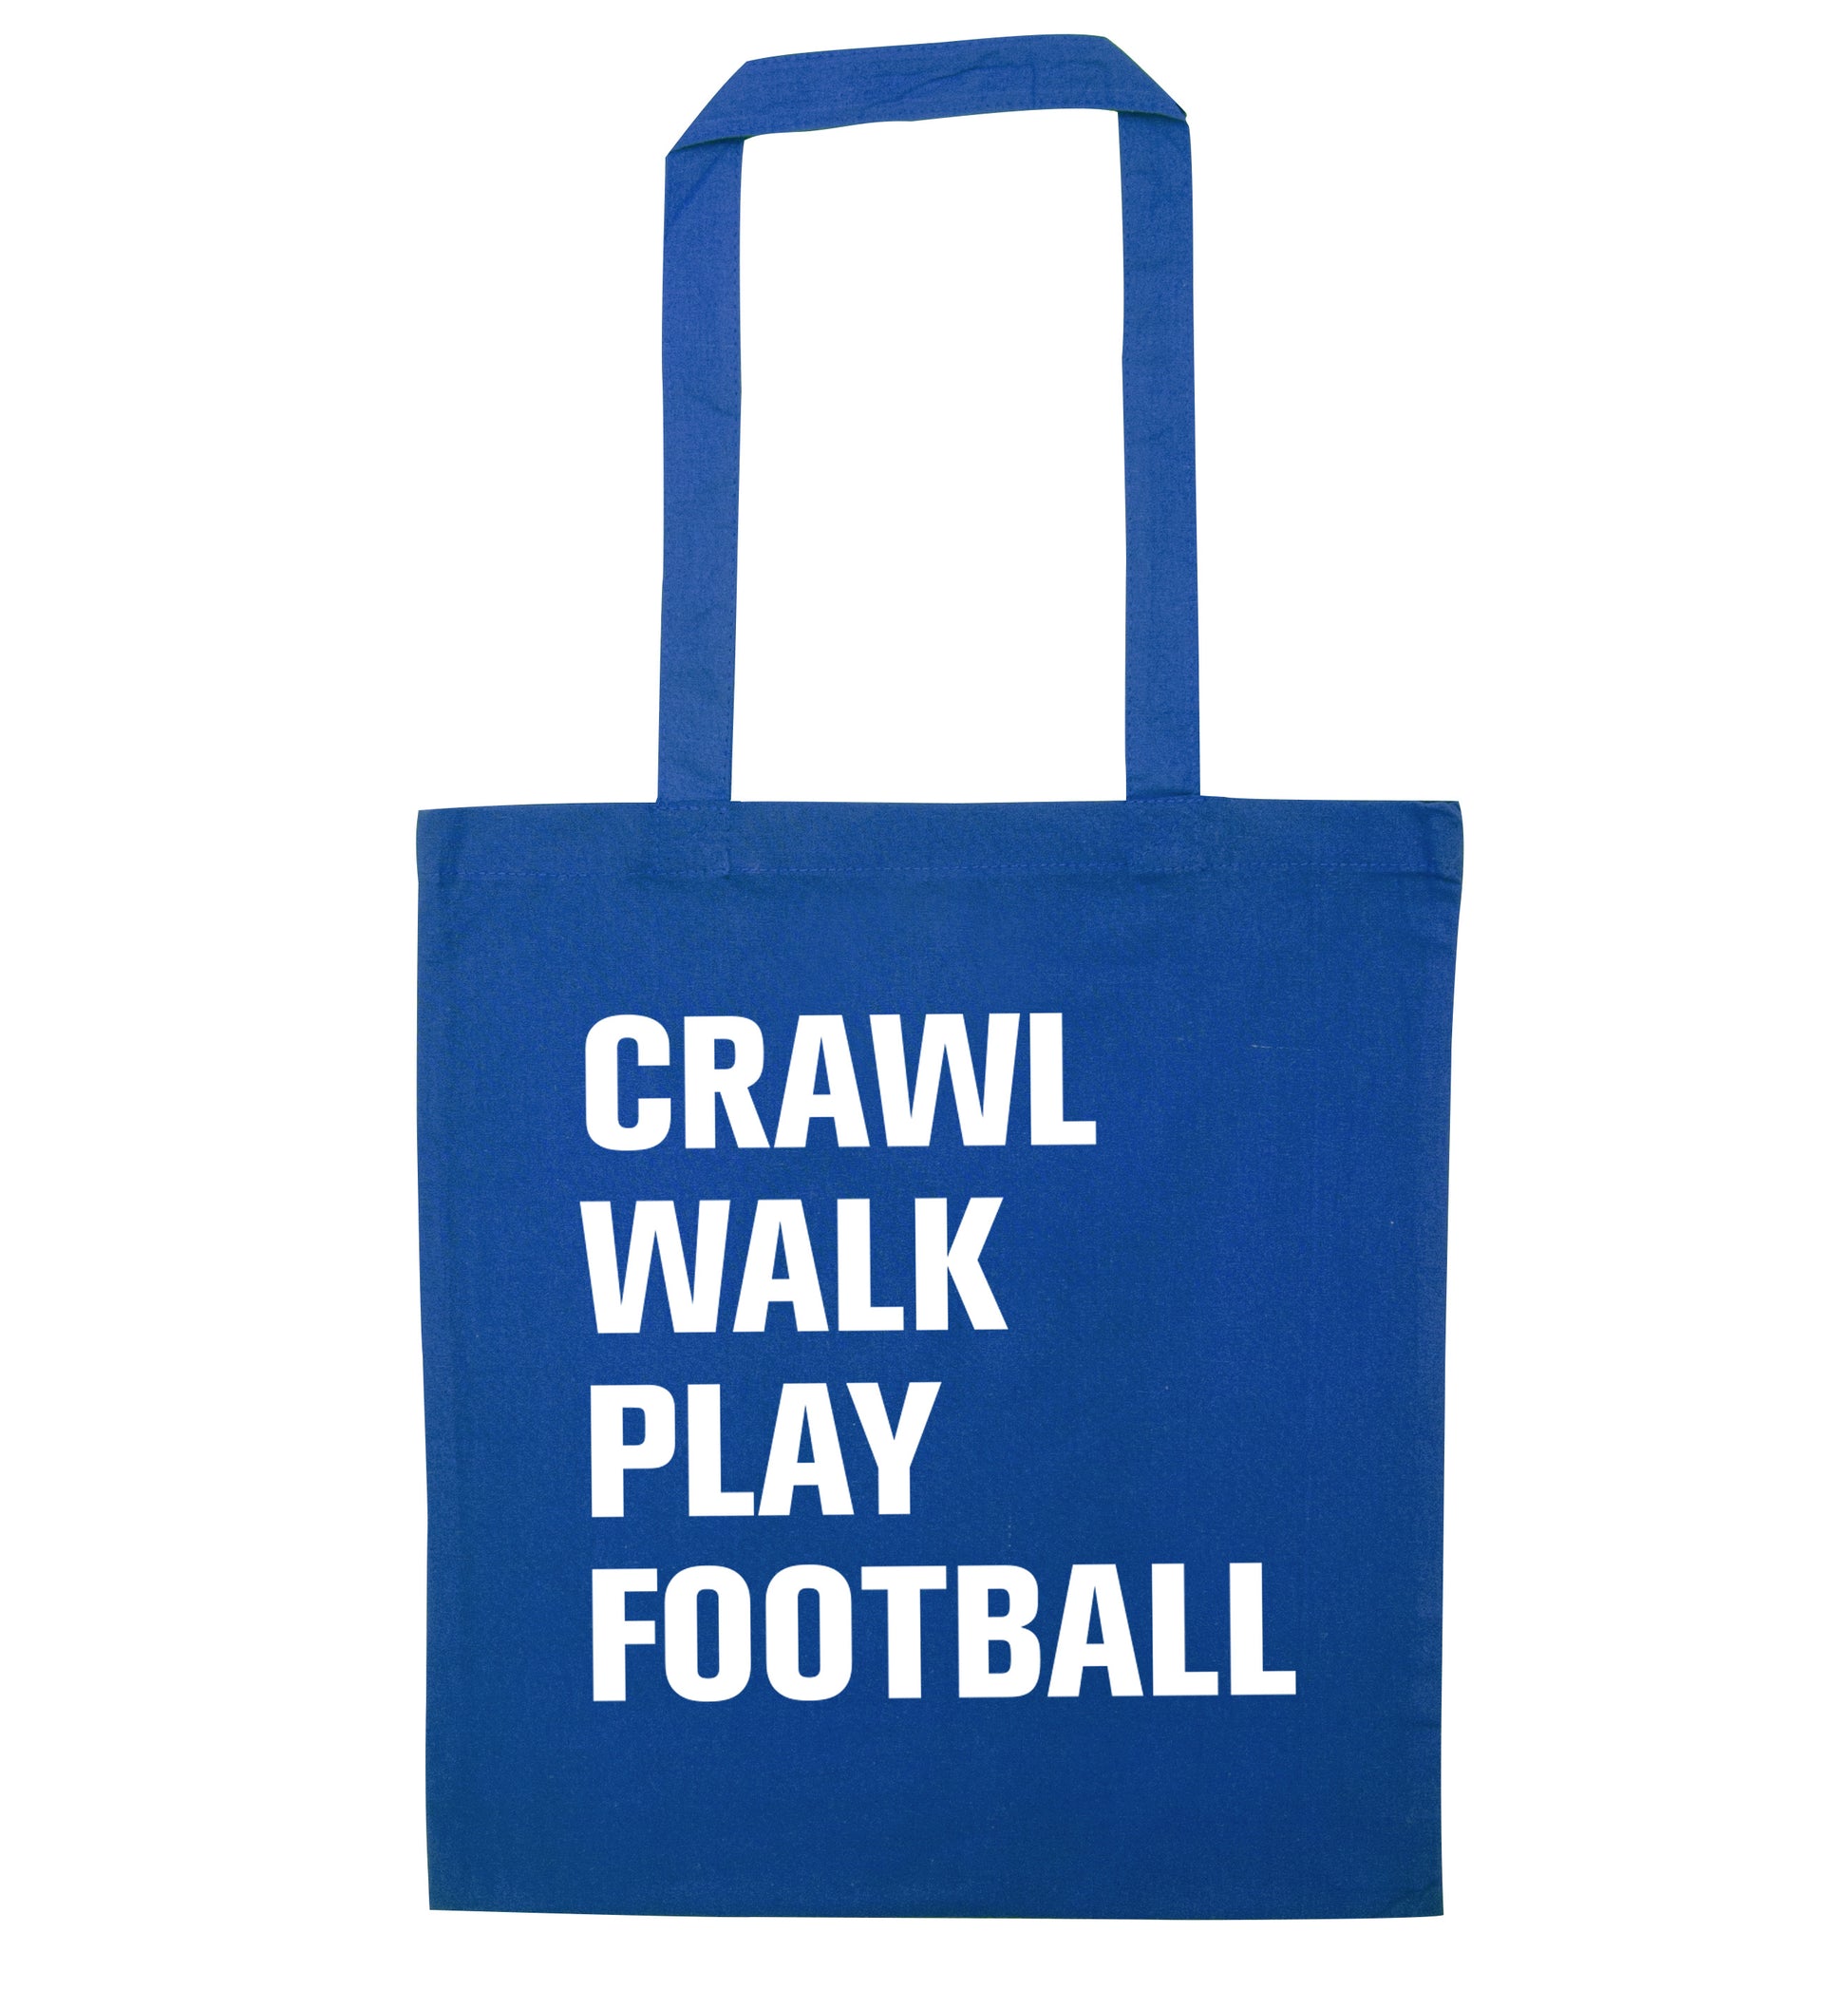 Crawl, walk, play football blue tote bag